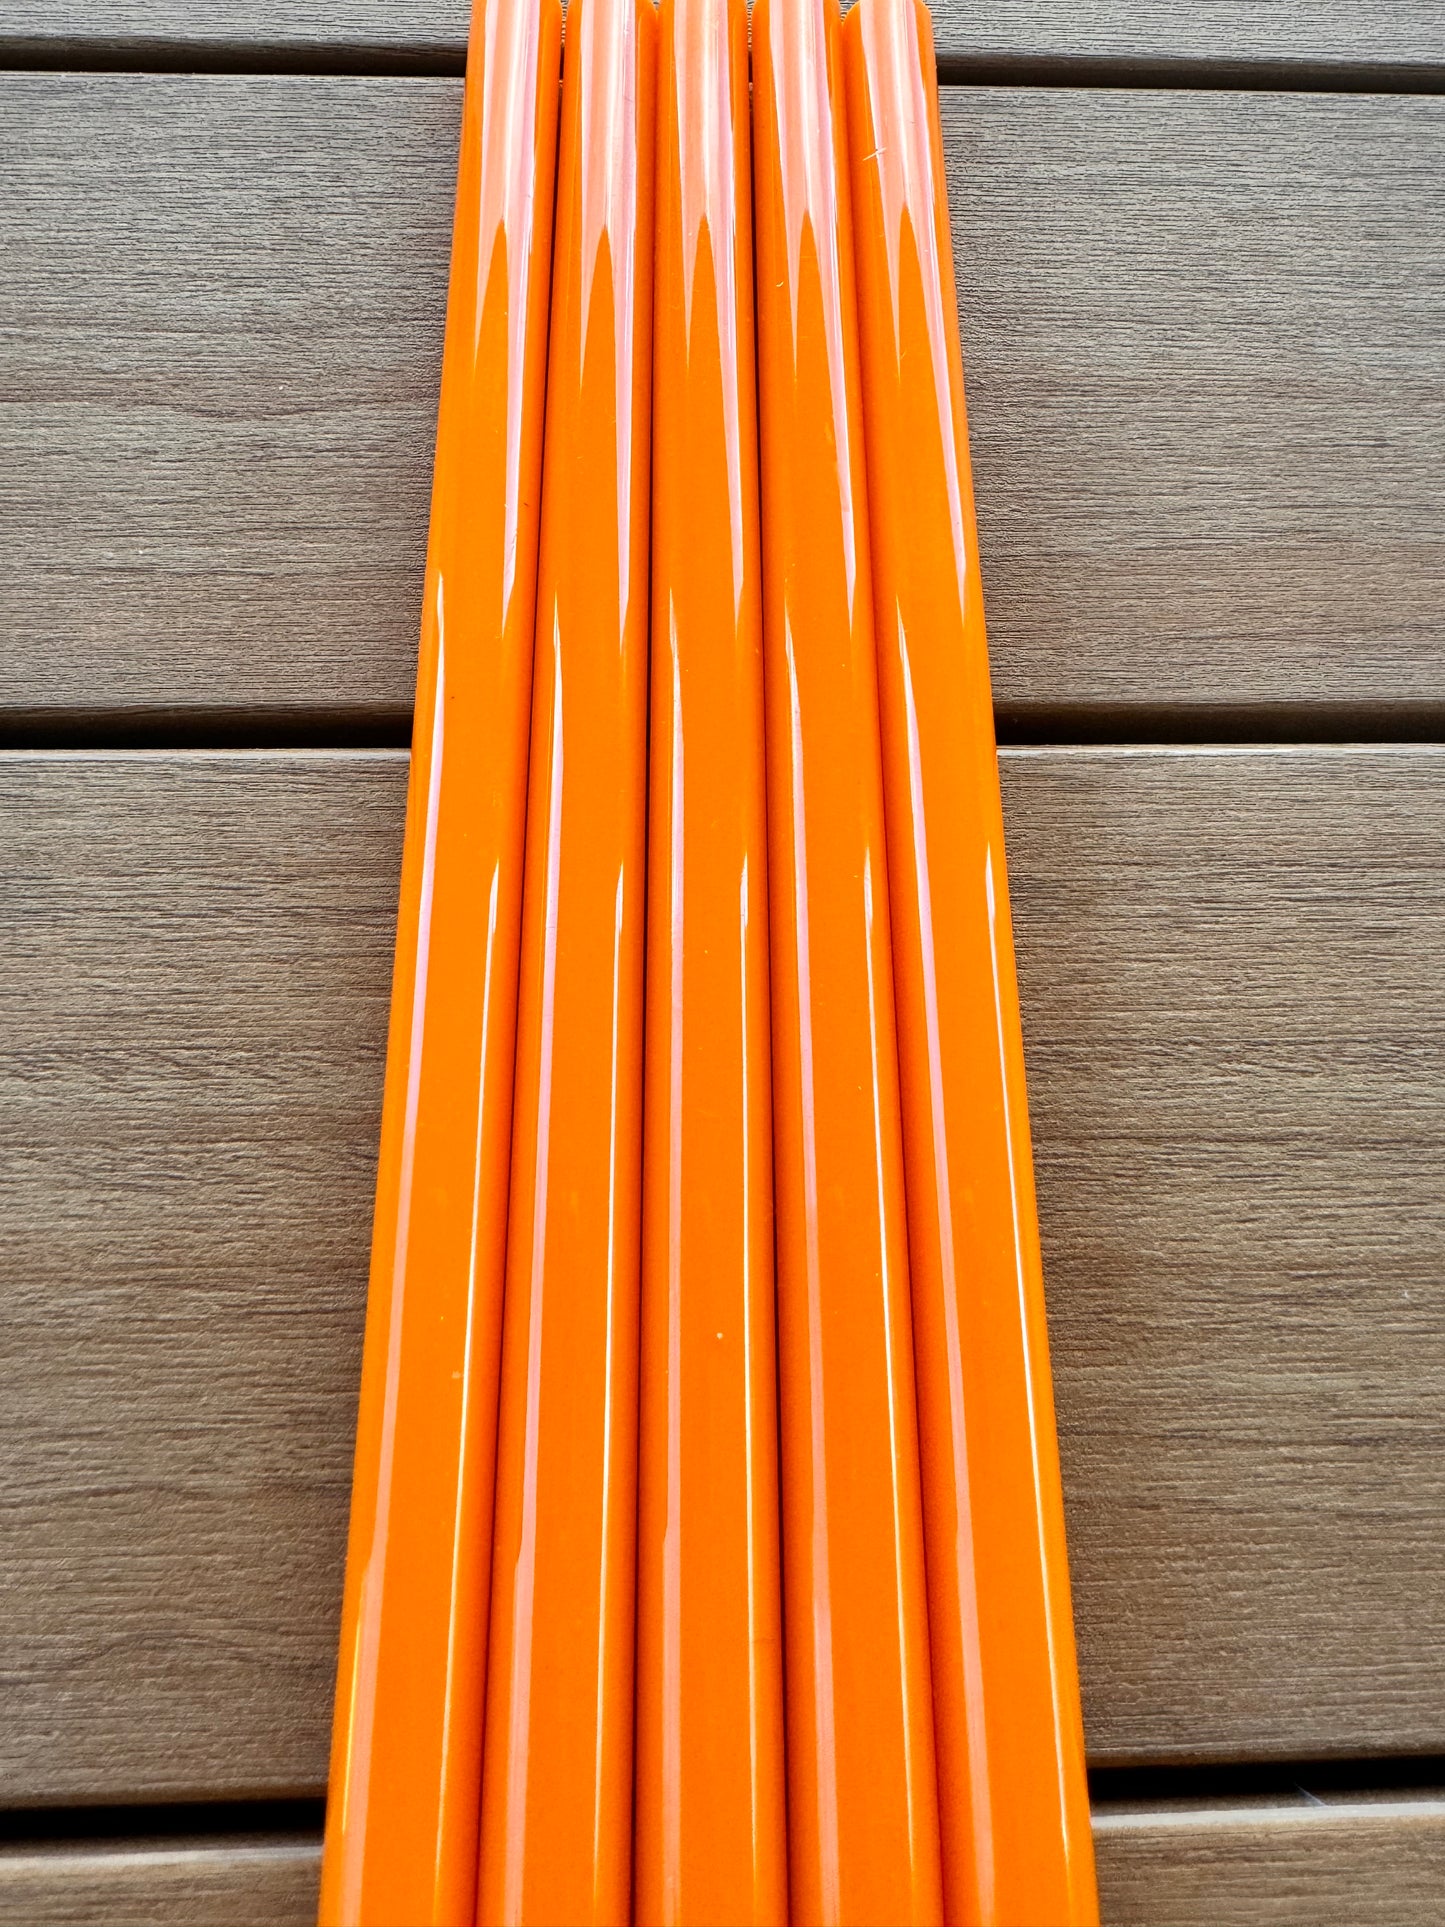 Nectarine Orange Straw | 40oz Tumbler | Wide Fit